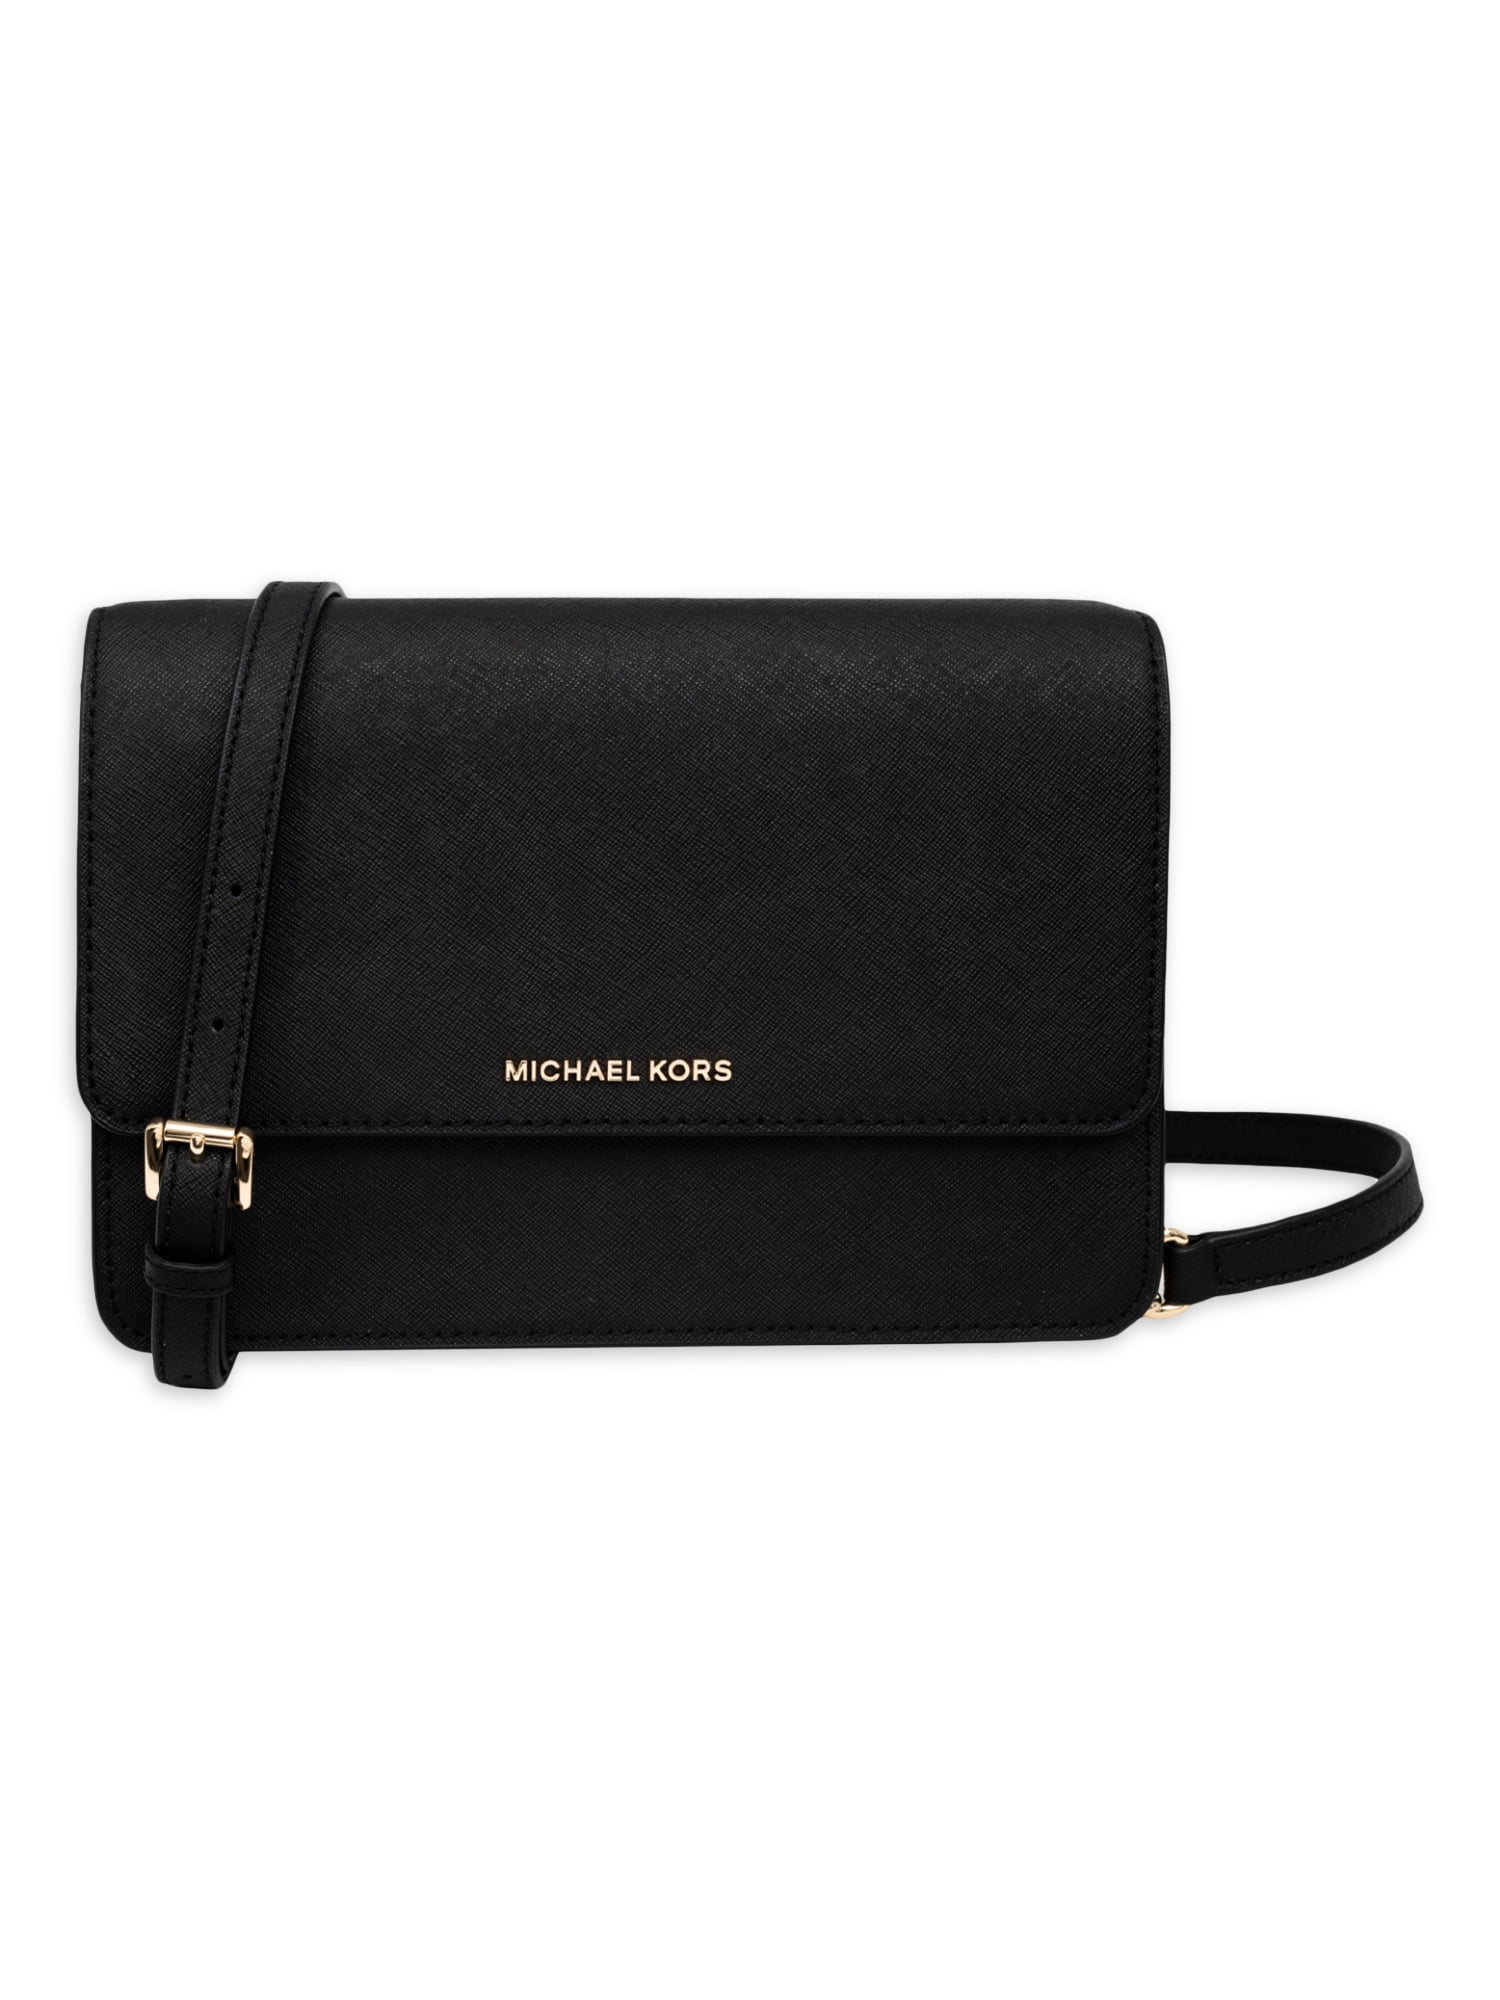 Michael Kors Daniela Large Saffiano Leather Crossbody Bag for